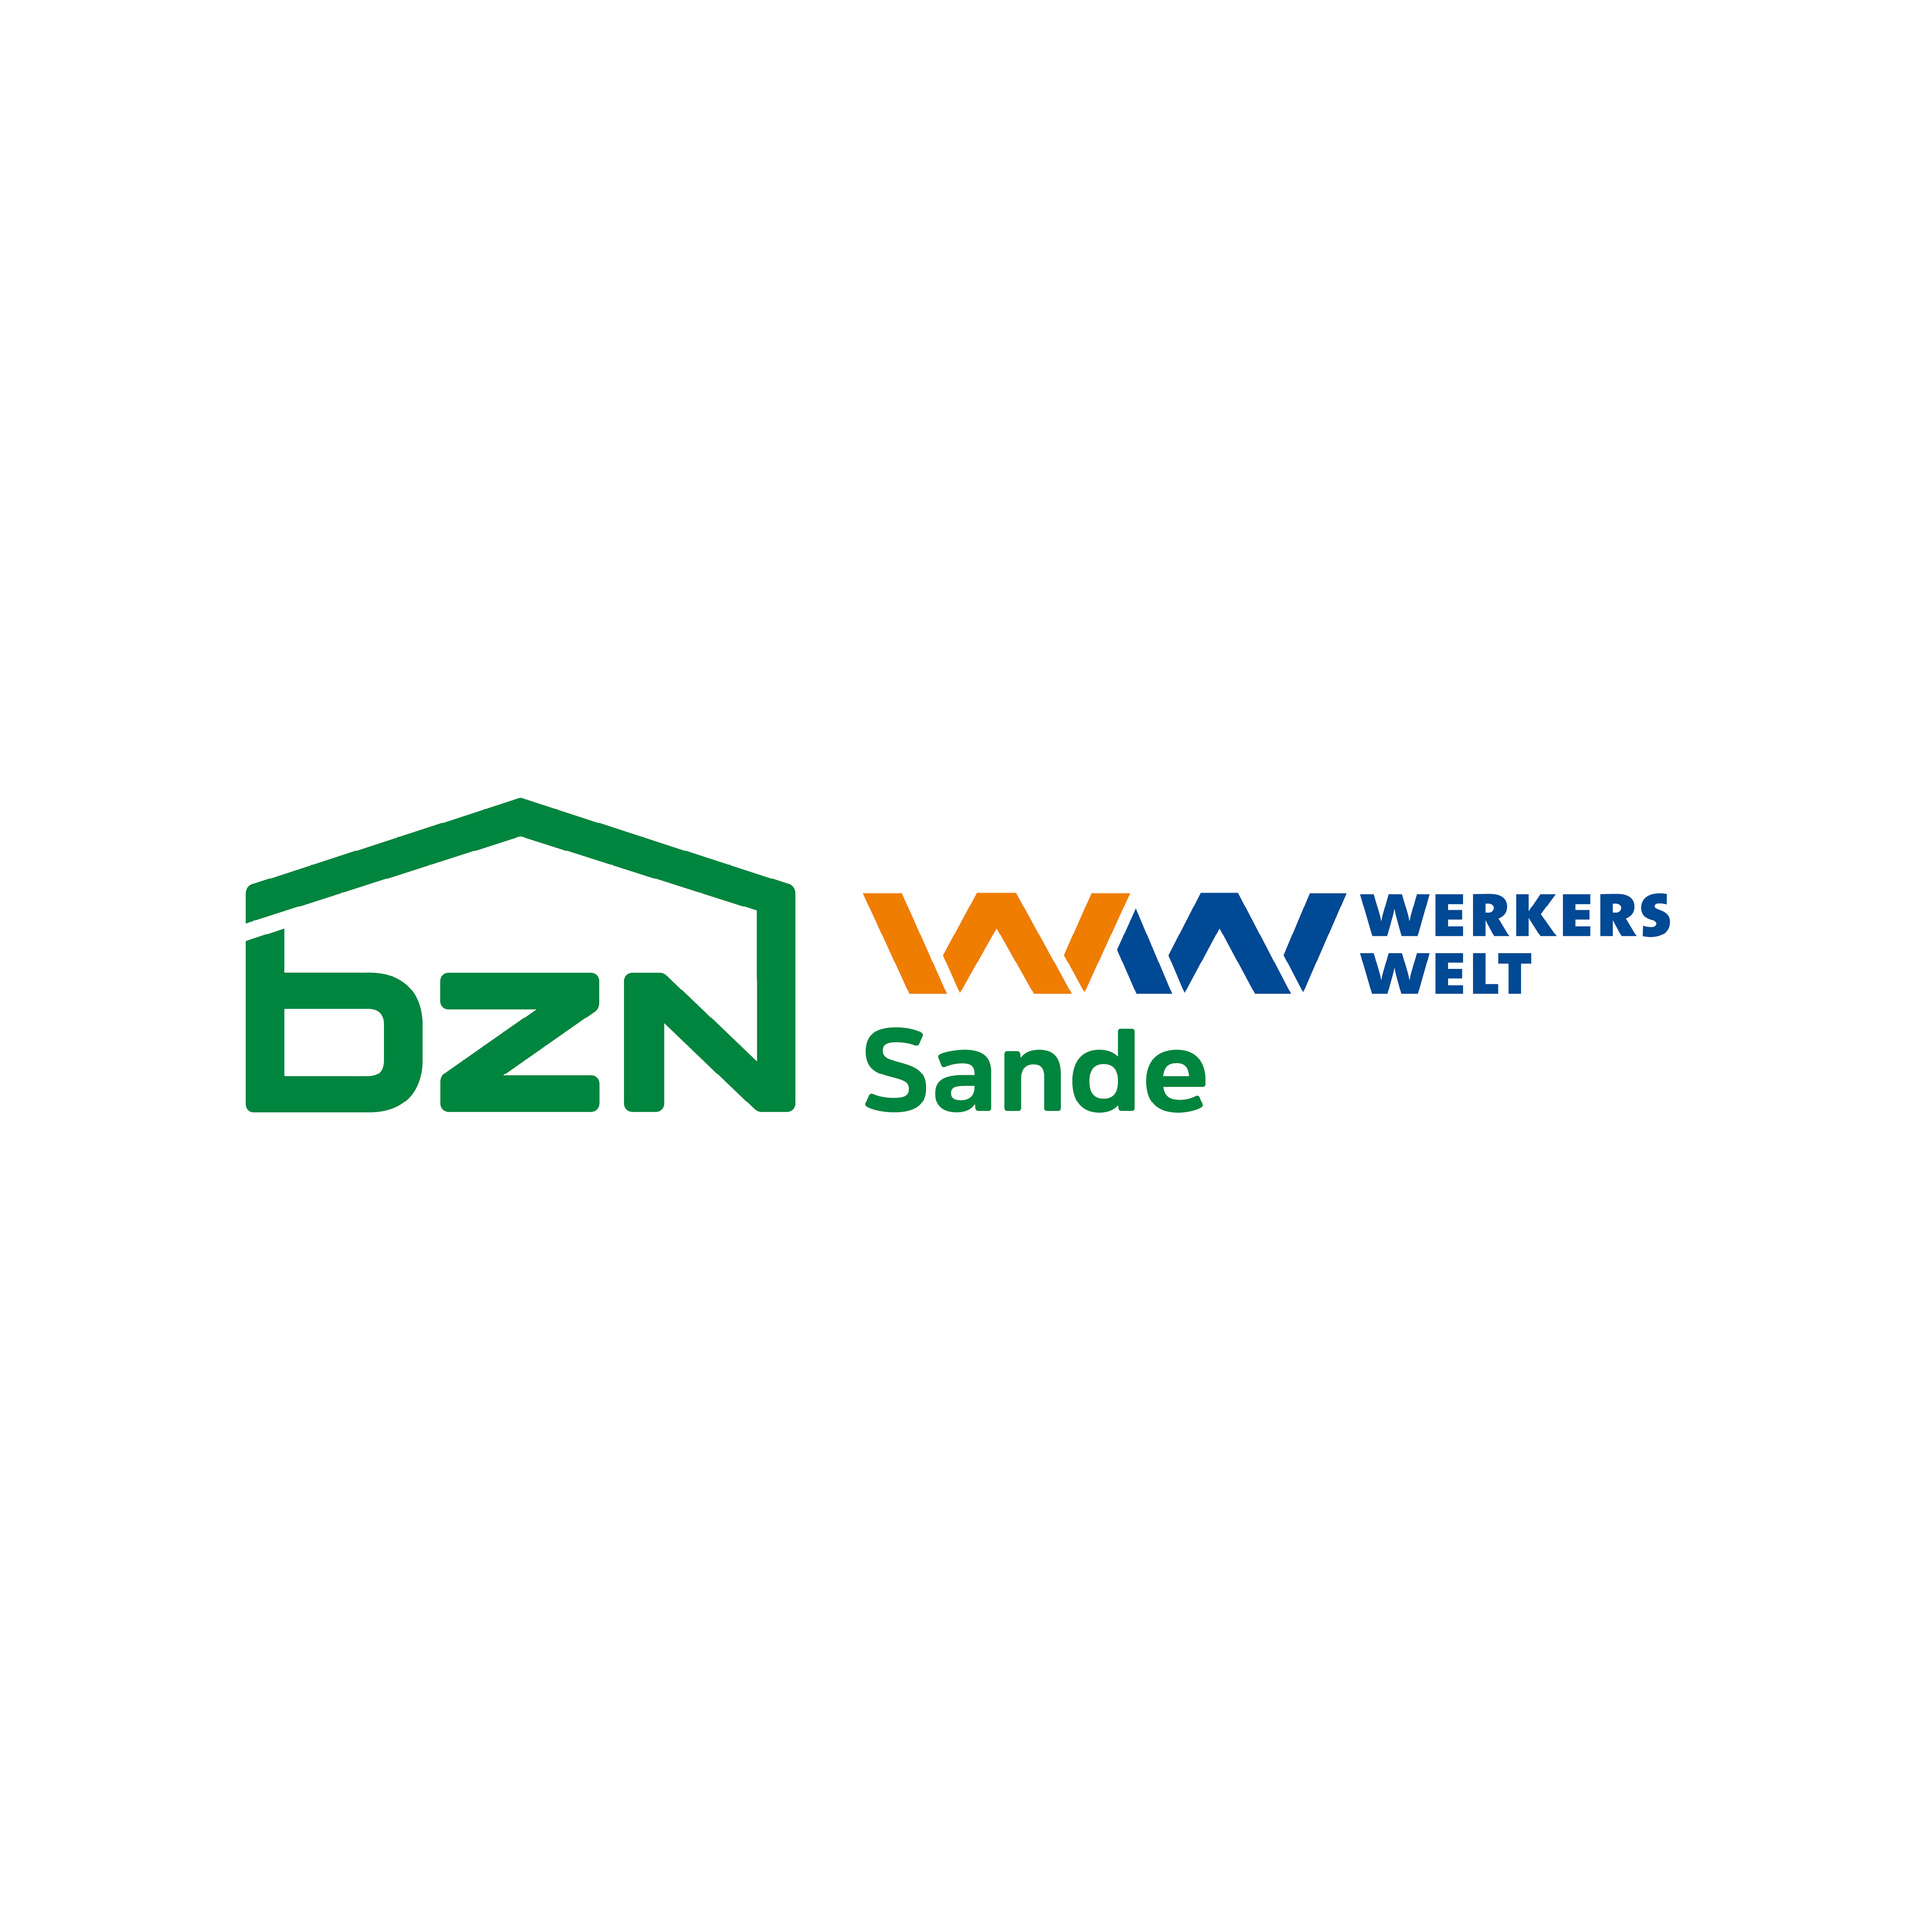 Werkers Welt Sande - BZN Bauzentrum Sande GmbH & Co. KG in Sande Kreis Friesland - Logo